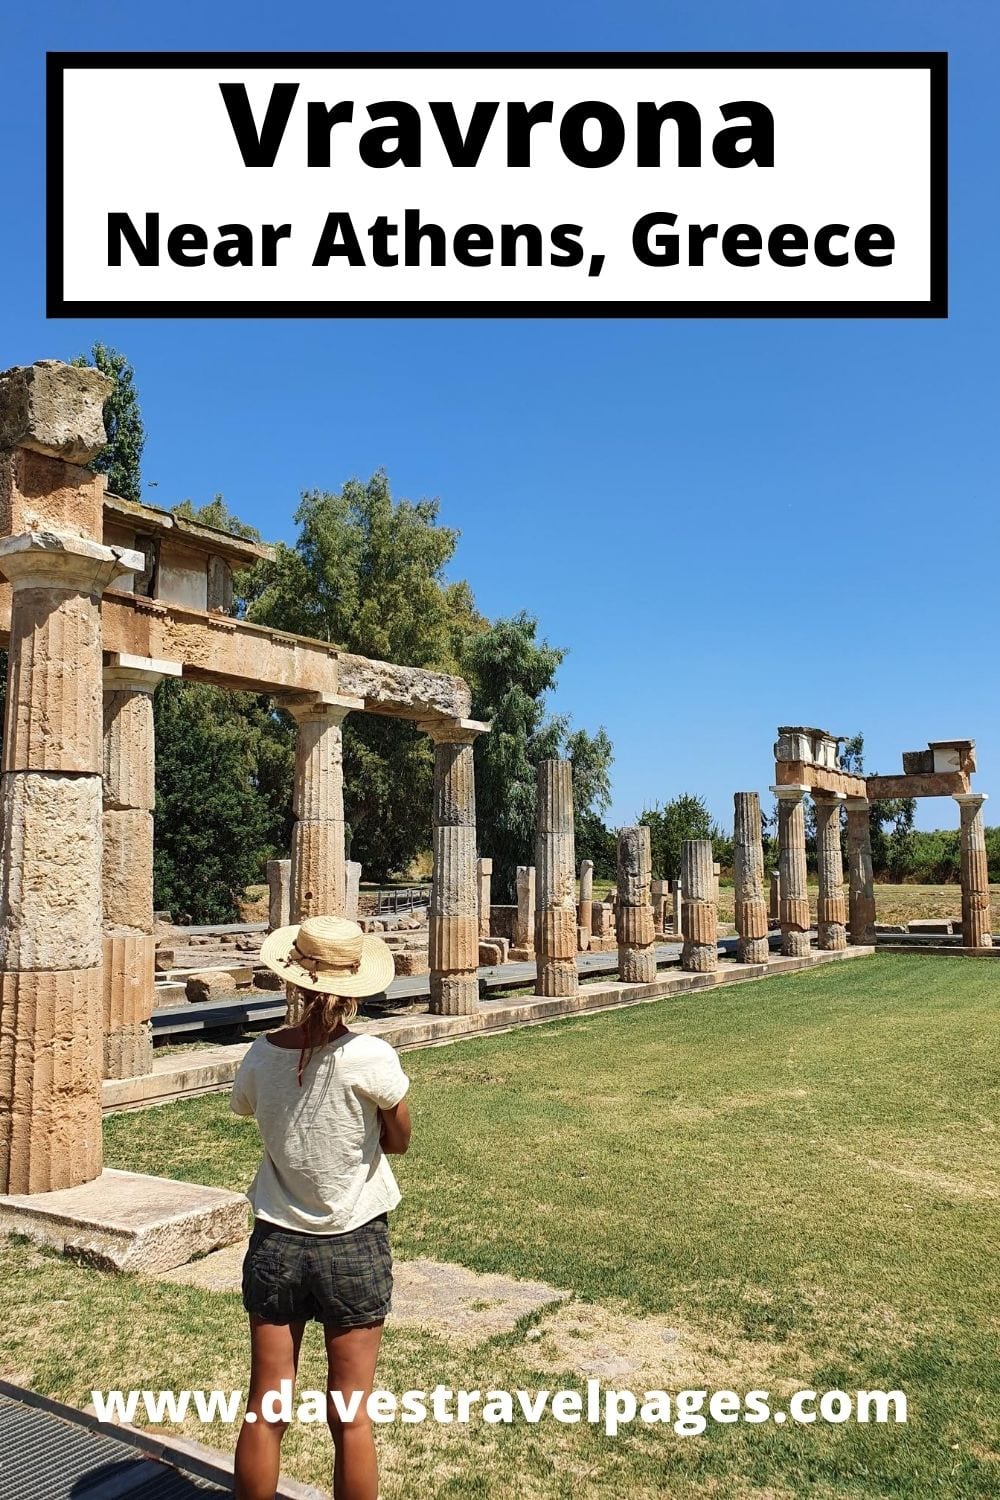 A guide to Vravrona near Athens, Greece